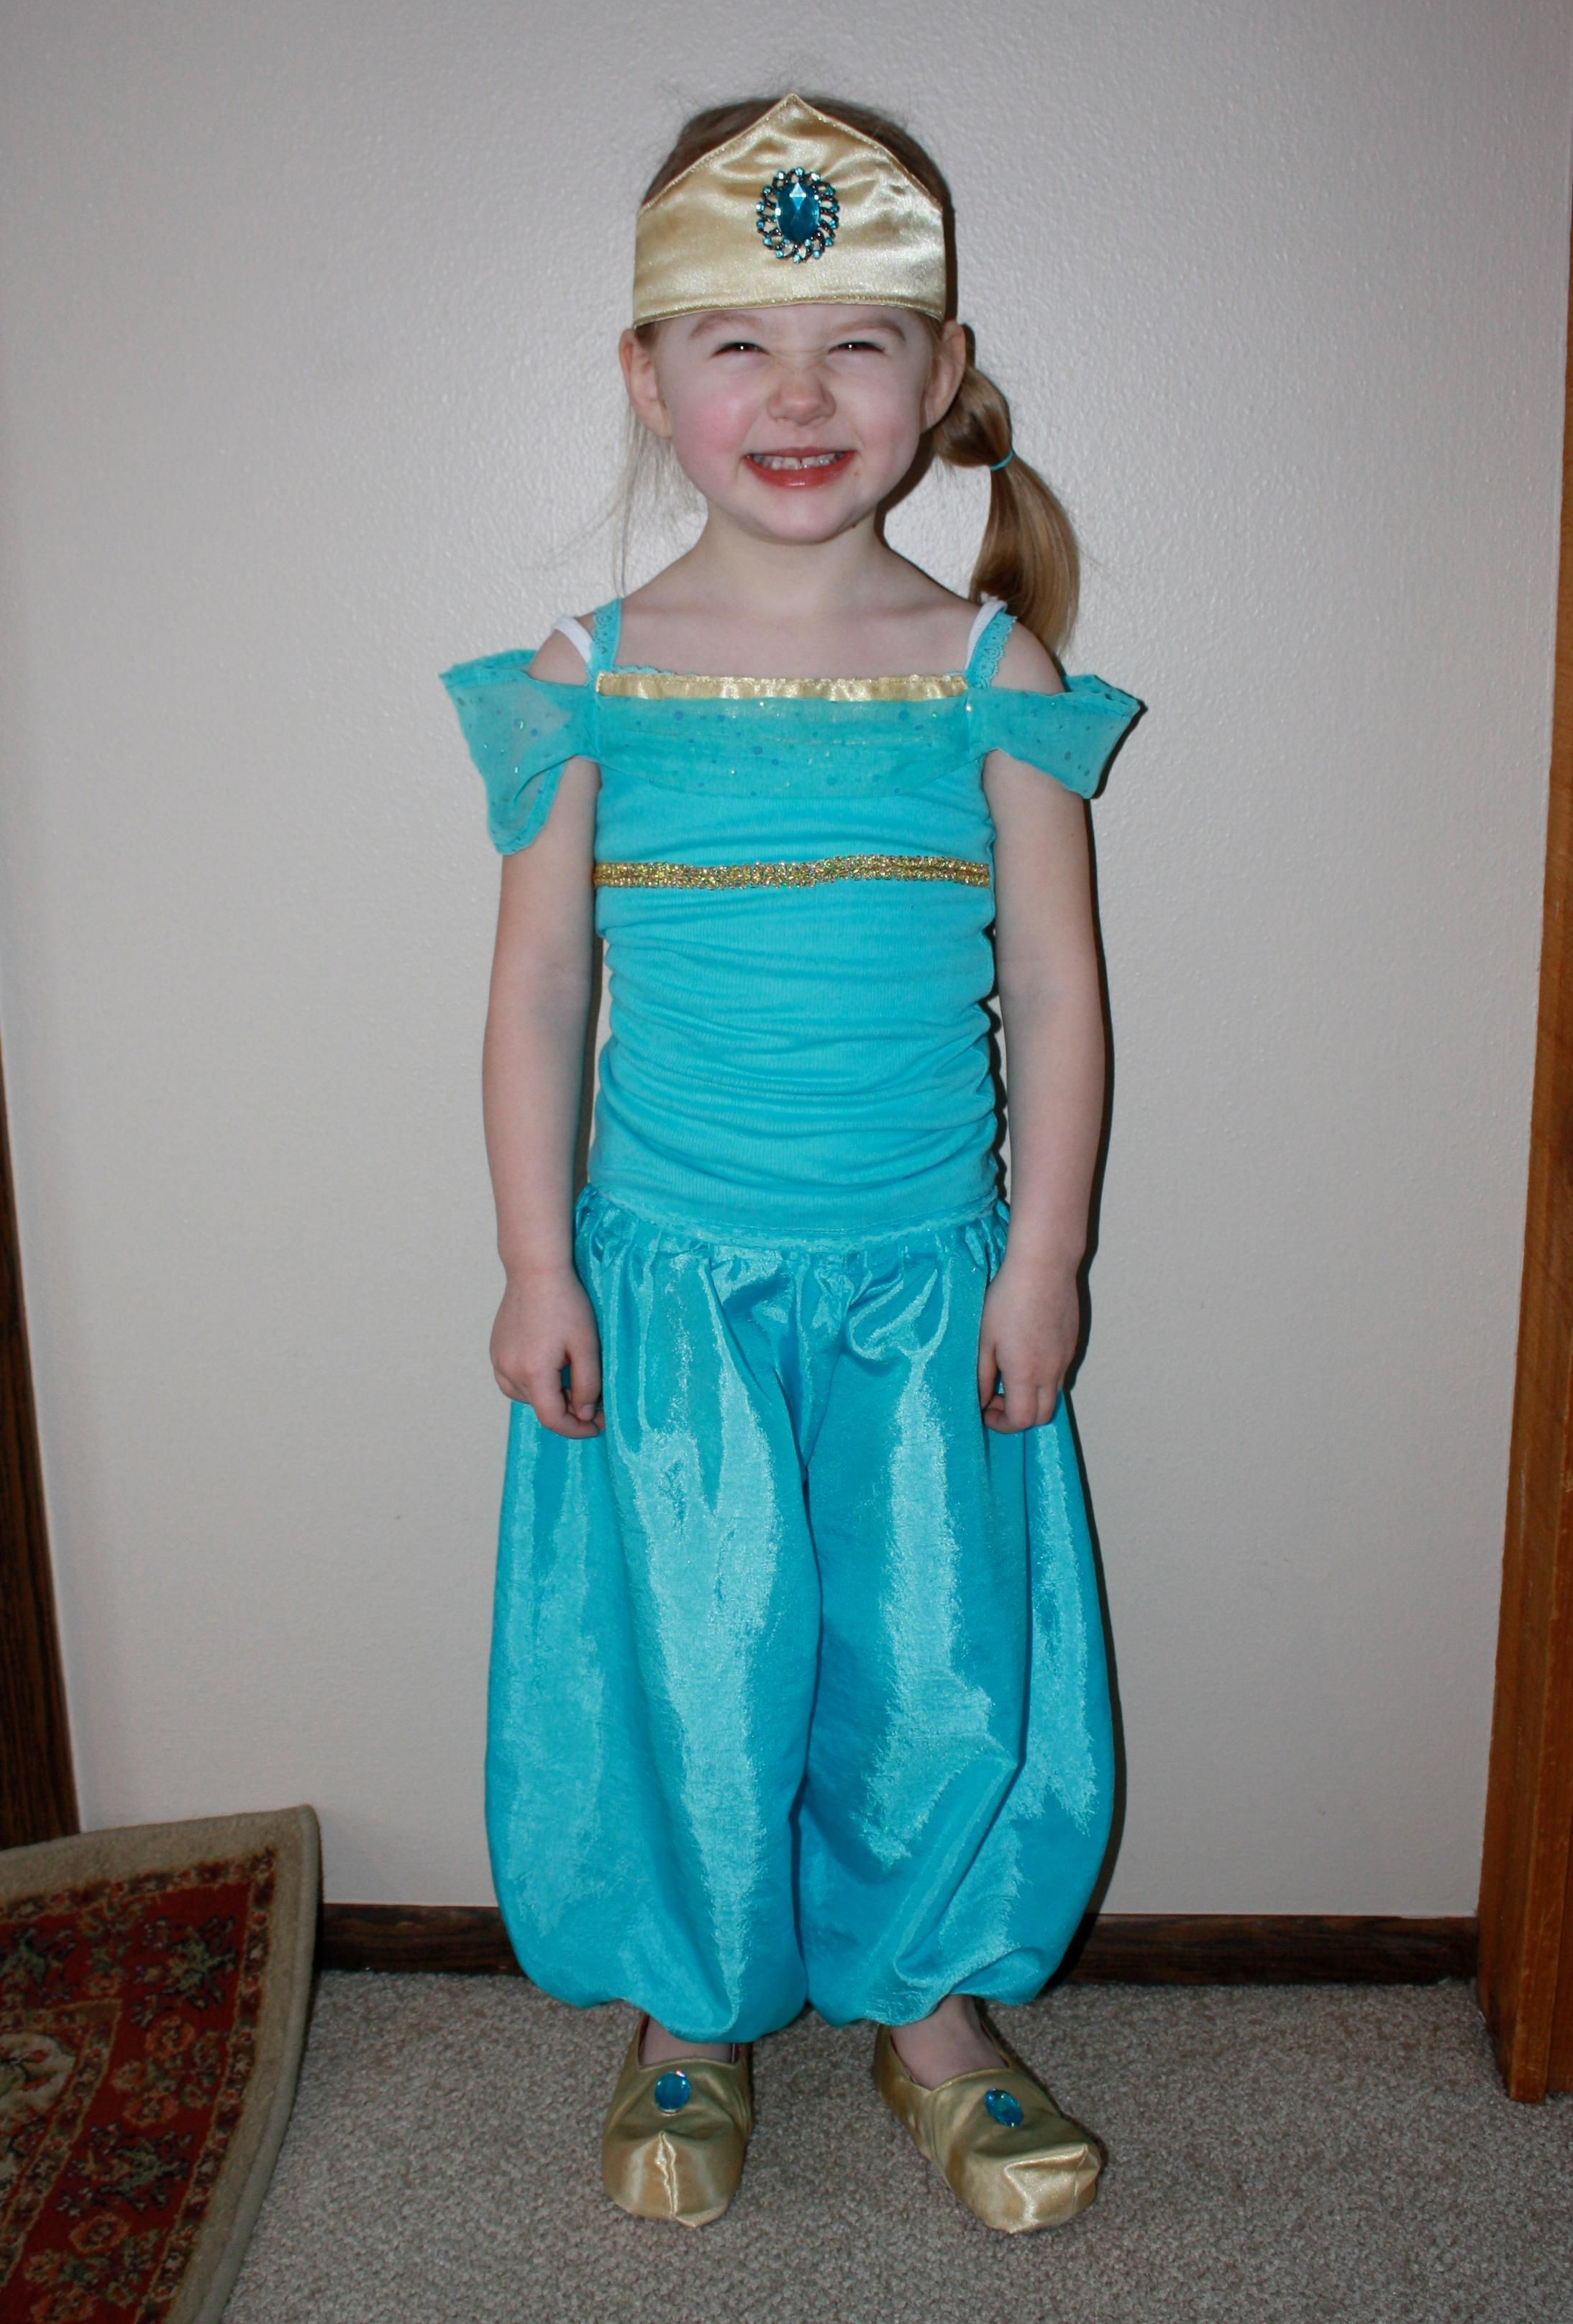 Best ideas about Princess Jasmine DIY Costume
. Save or Pin DIY Fairy Costume DIY princess jasmine costume DIY Now.